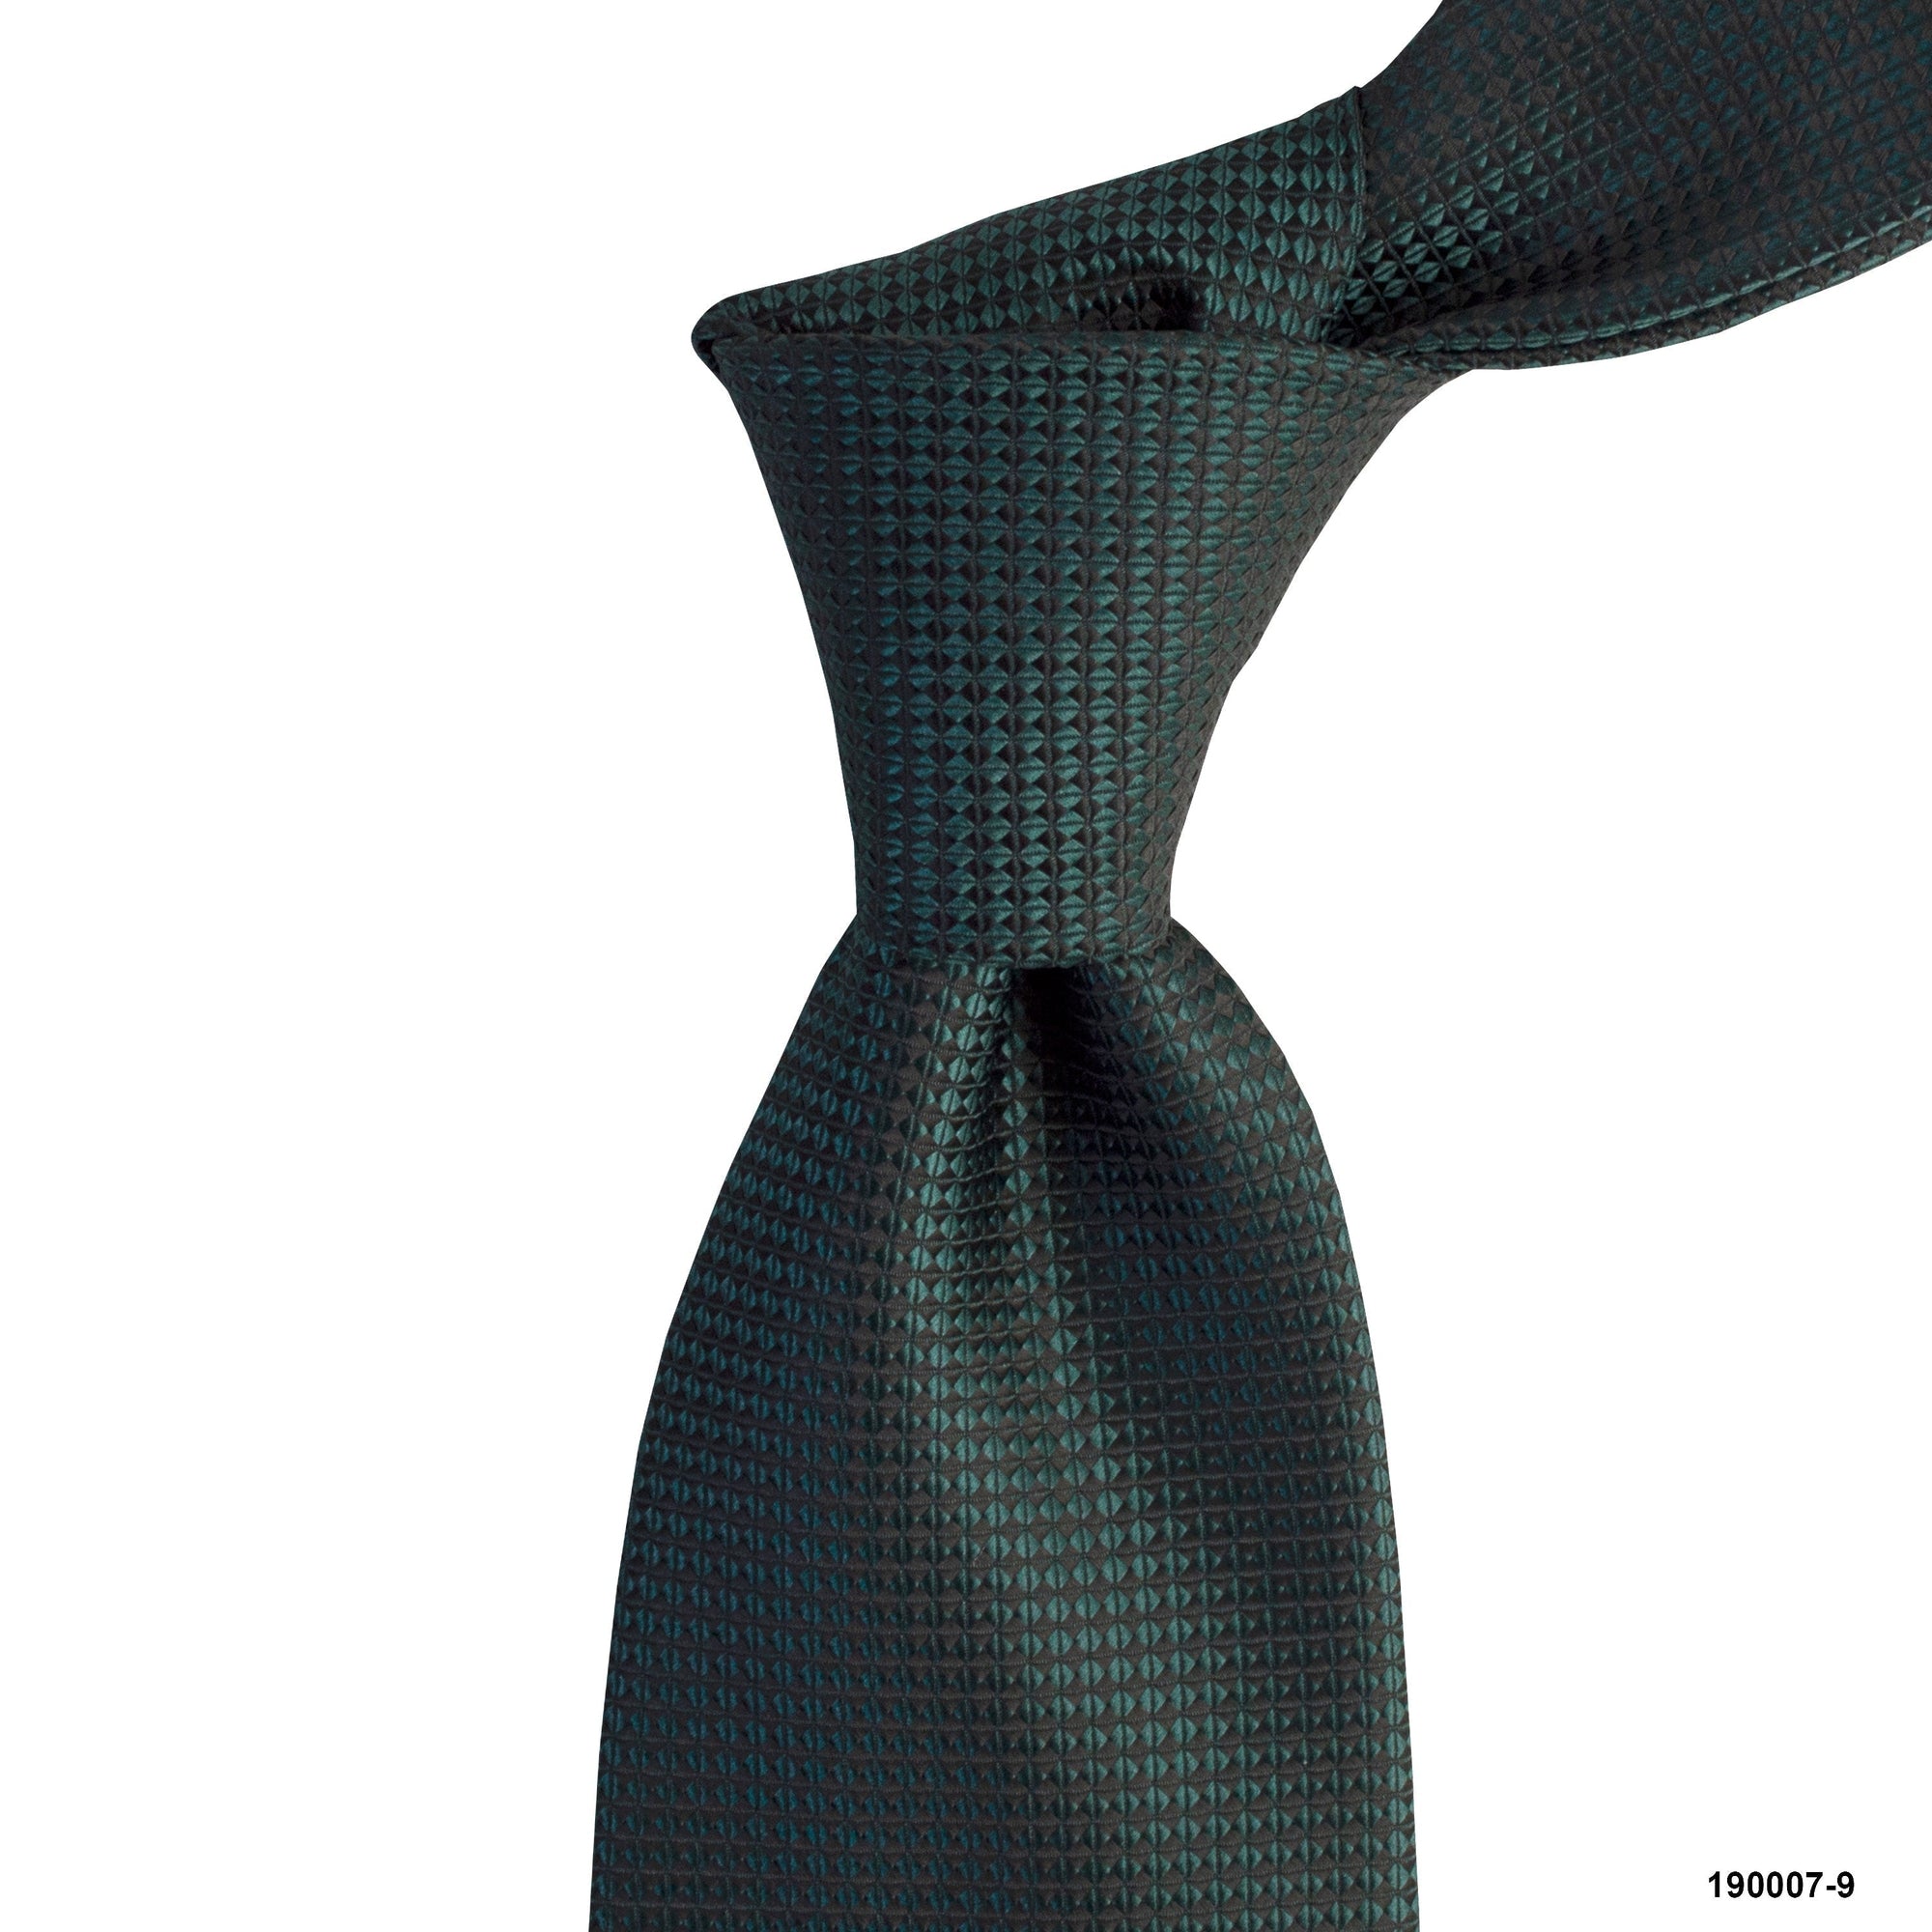 MarZthomson 8cm Dark Green Micro Geometric Detail Tie-Neckties-MarZthomson-Cufflinks.com.sg